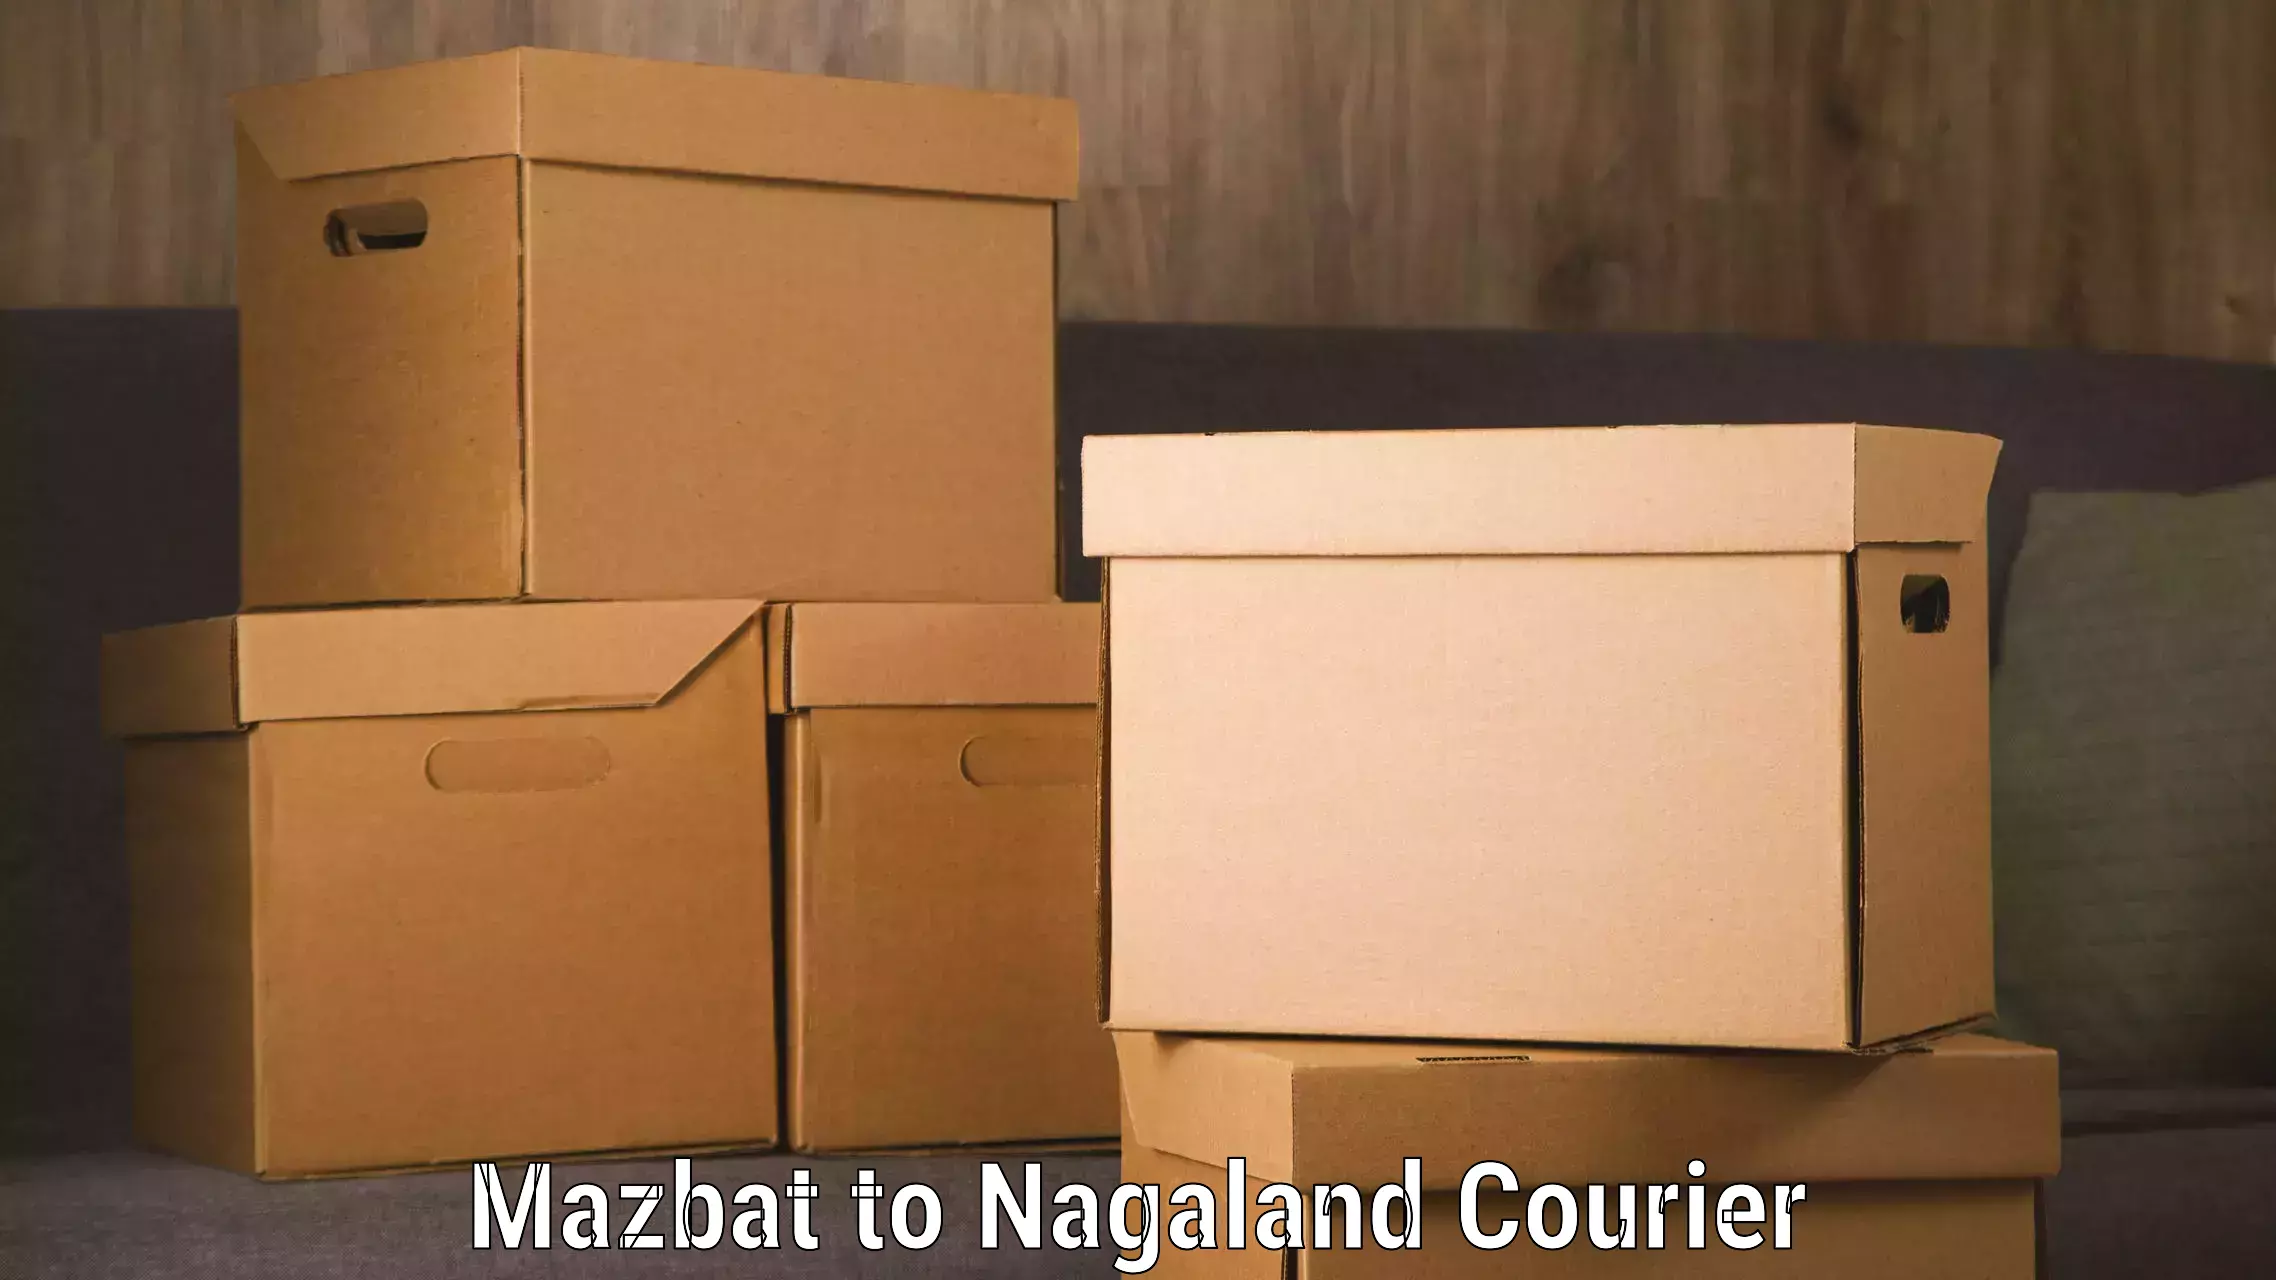 Same day luggage service Mazbat to Nagaland